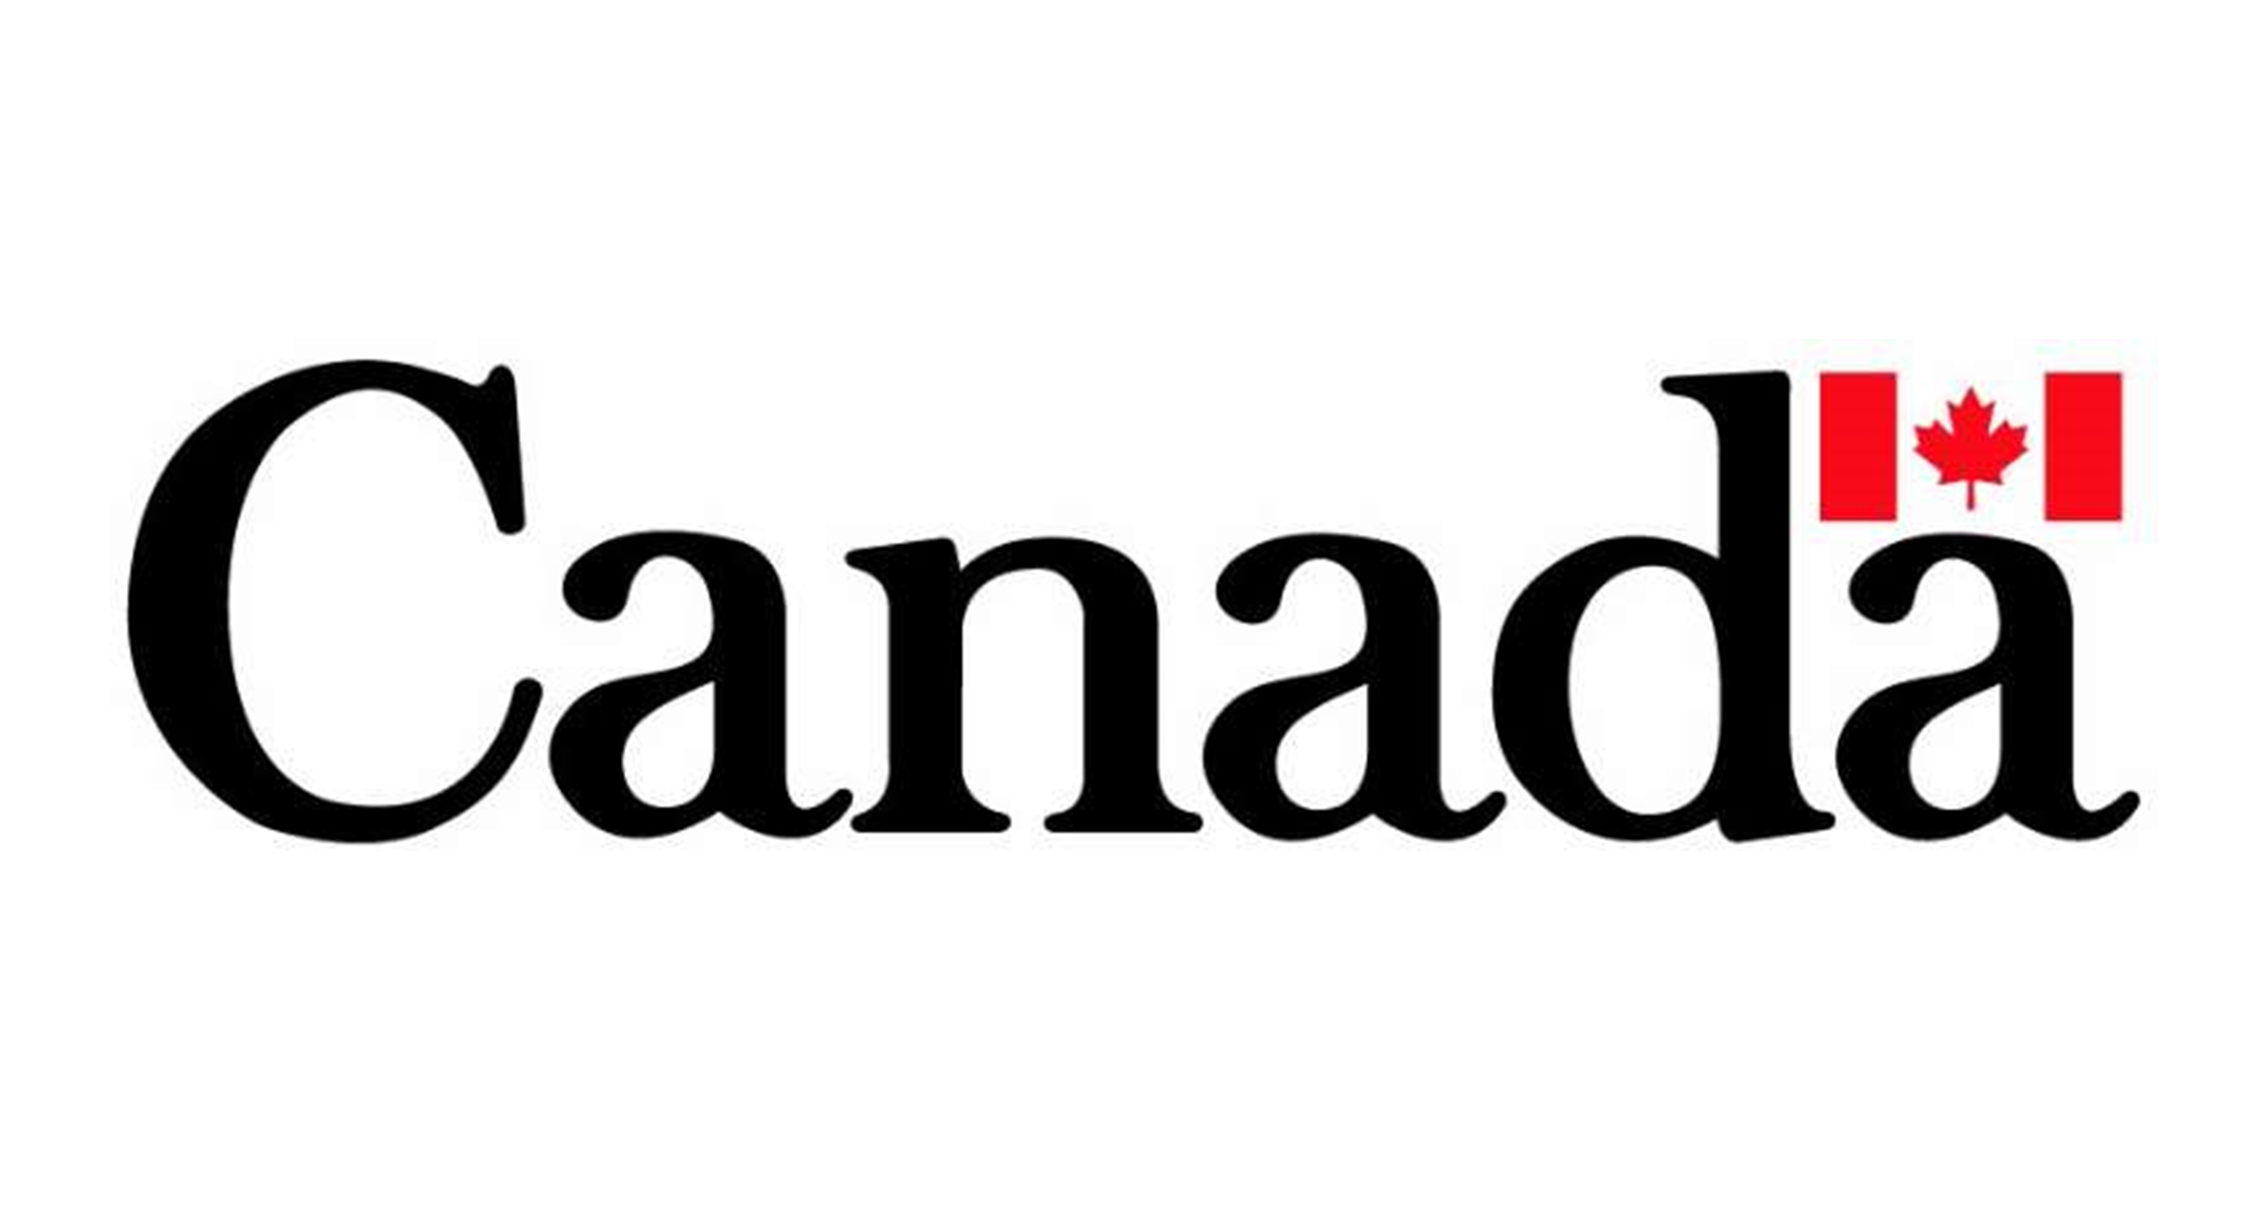 加拿大驻沪总领事馆 Consulate General of Canada